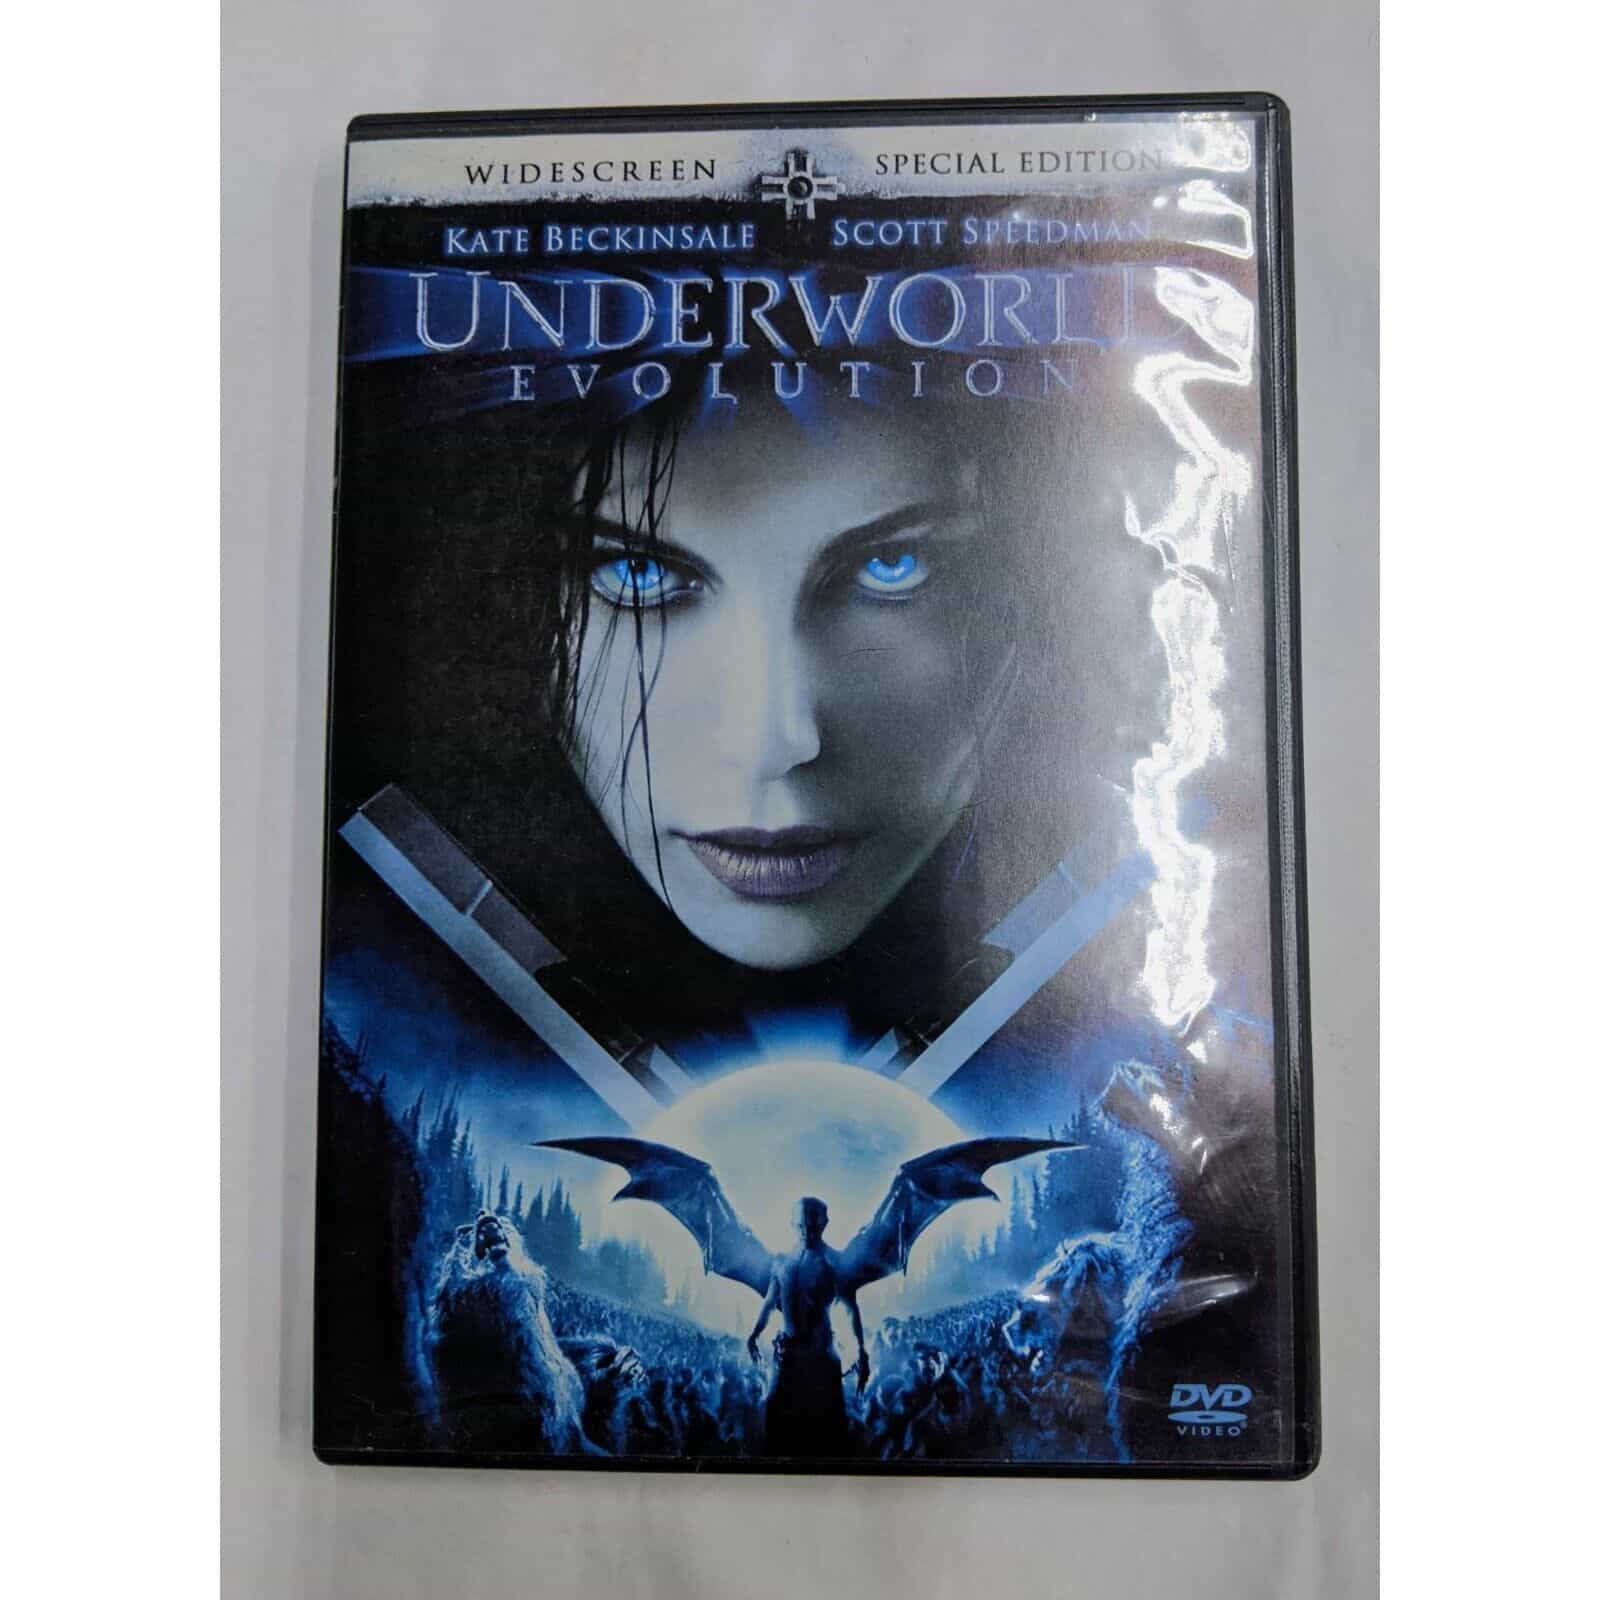 Underworld Evolution DVD Movie – Widescreen Special Edition